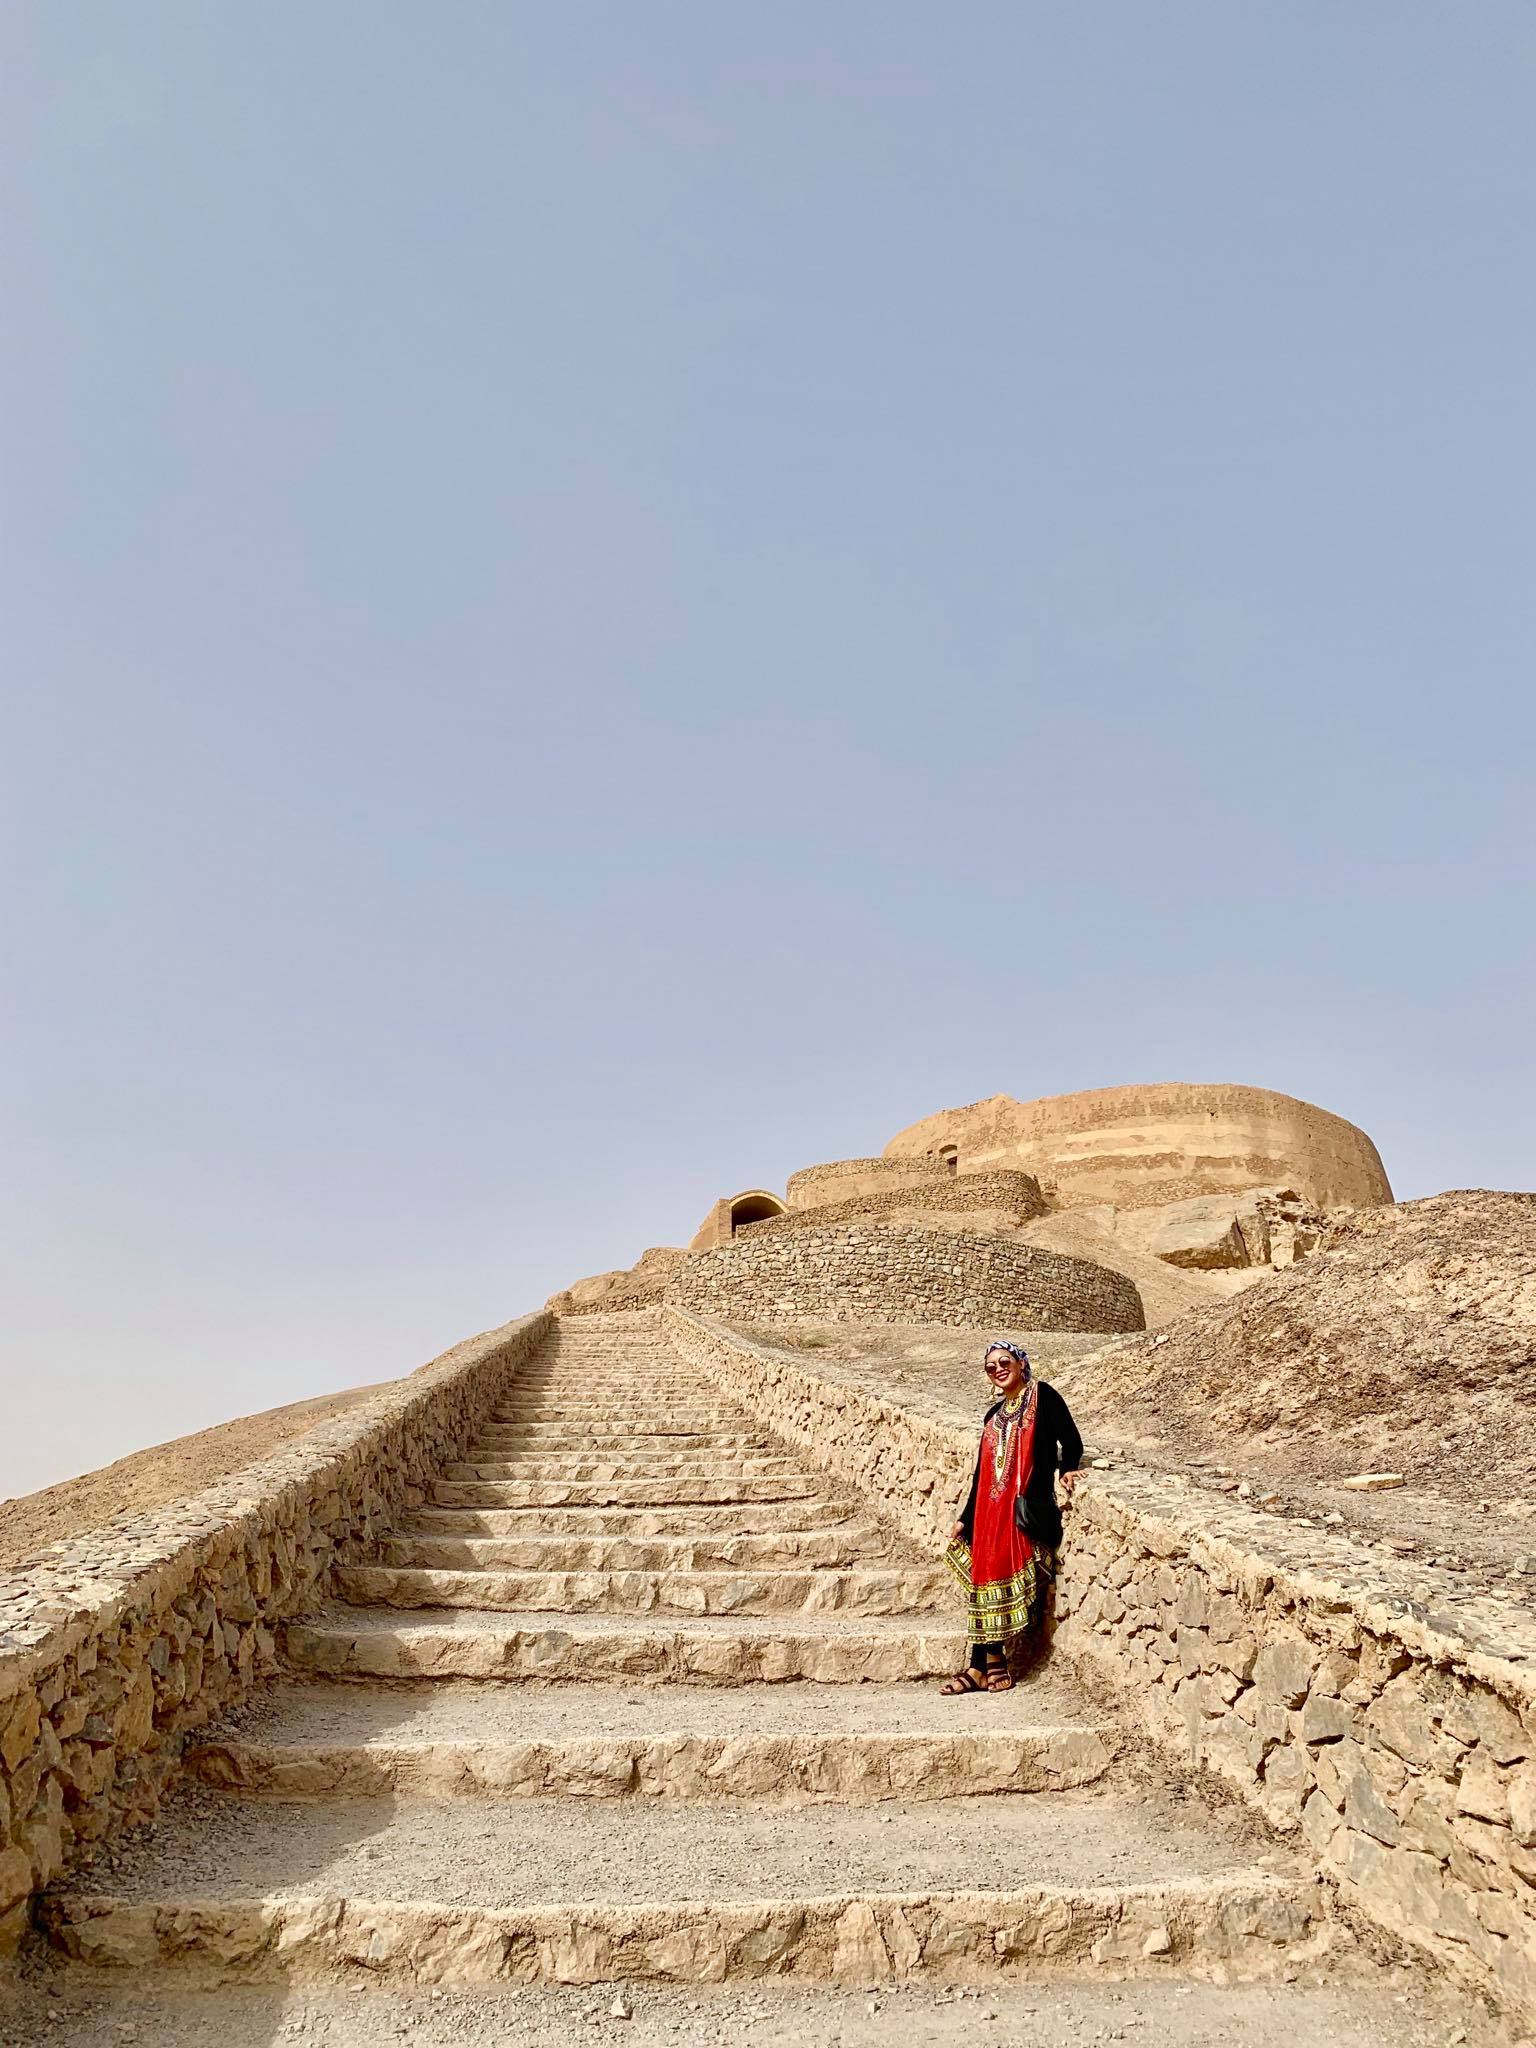 Kach Solo Travels in 2019 YAZD - the desert city in Iran12.jpg